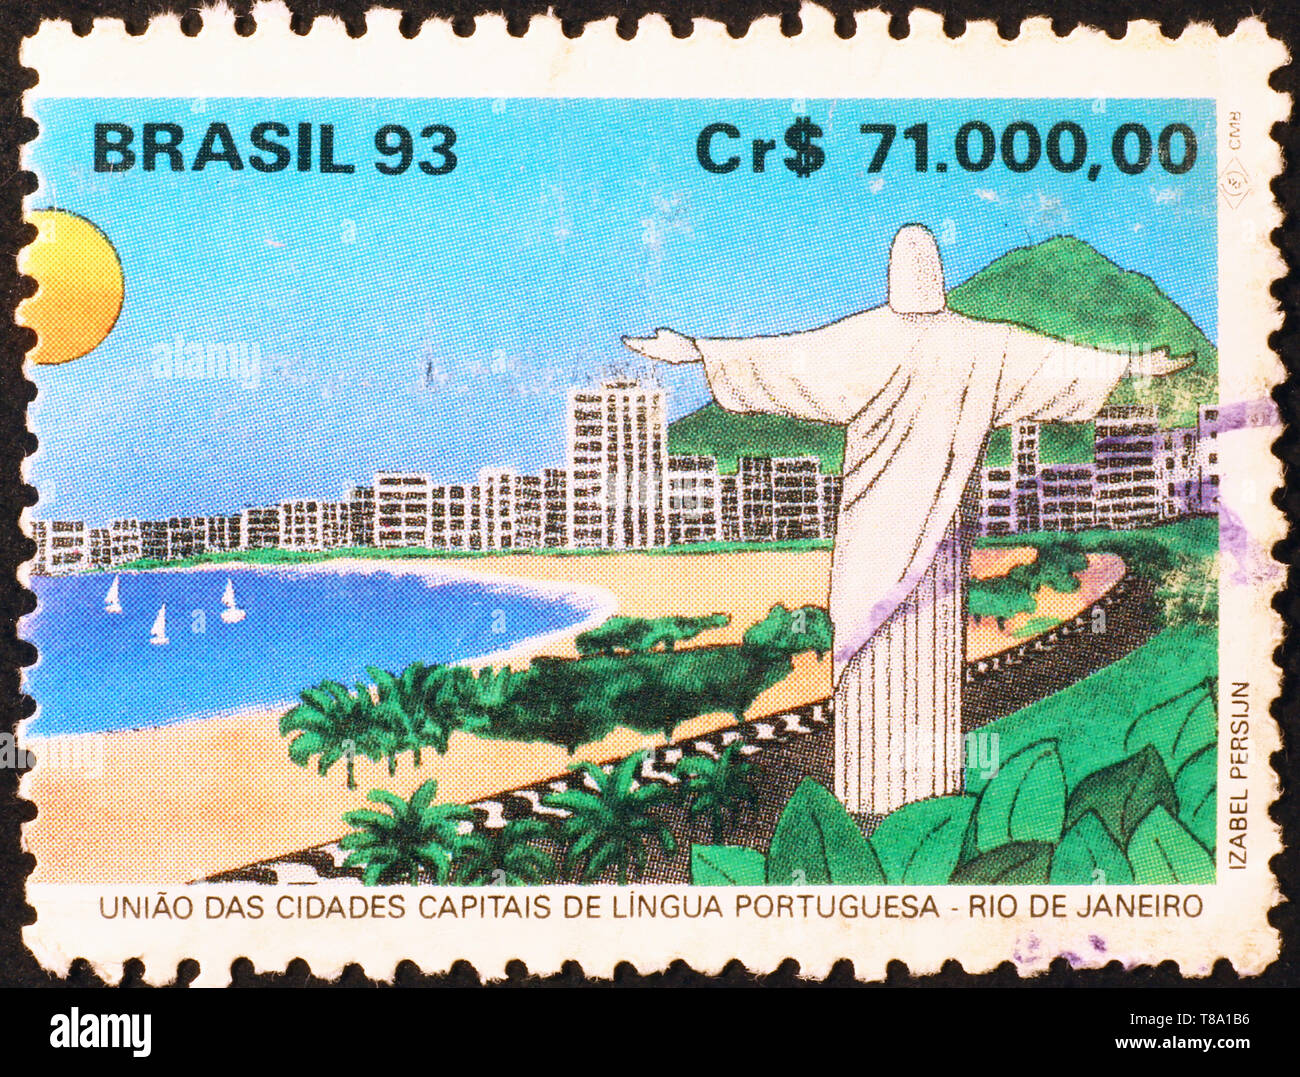 c1930 RIO DE JANEIRO BRASIL LAGOA RODRIGO DE FREITAS RPPC POSTCARD P1700